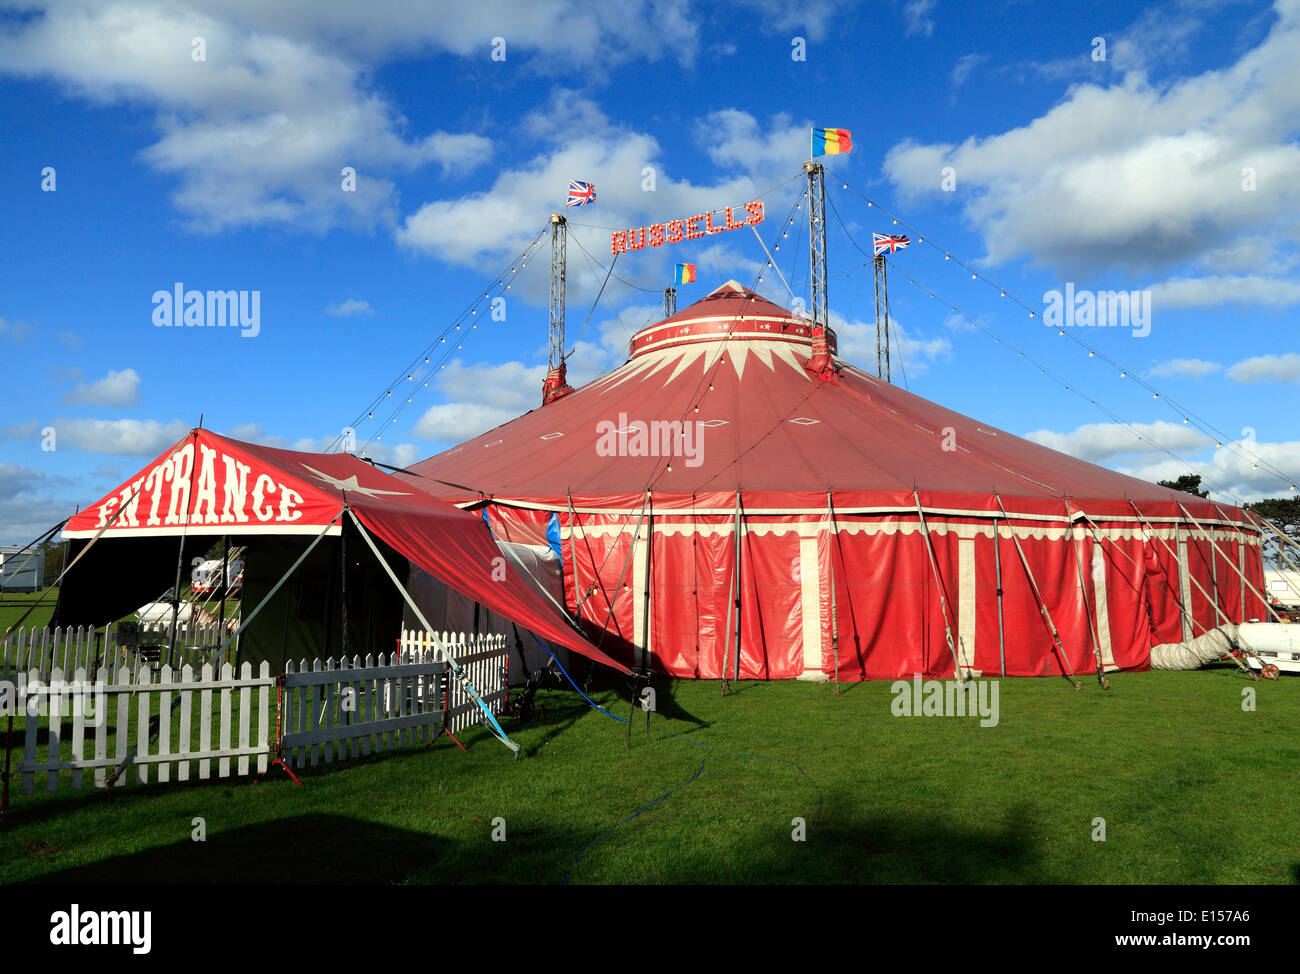 Russells Circus internazionale, UK circo itinerante mostra, Big Top tenda, Norfolk, Inghilterra Foto Stock